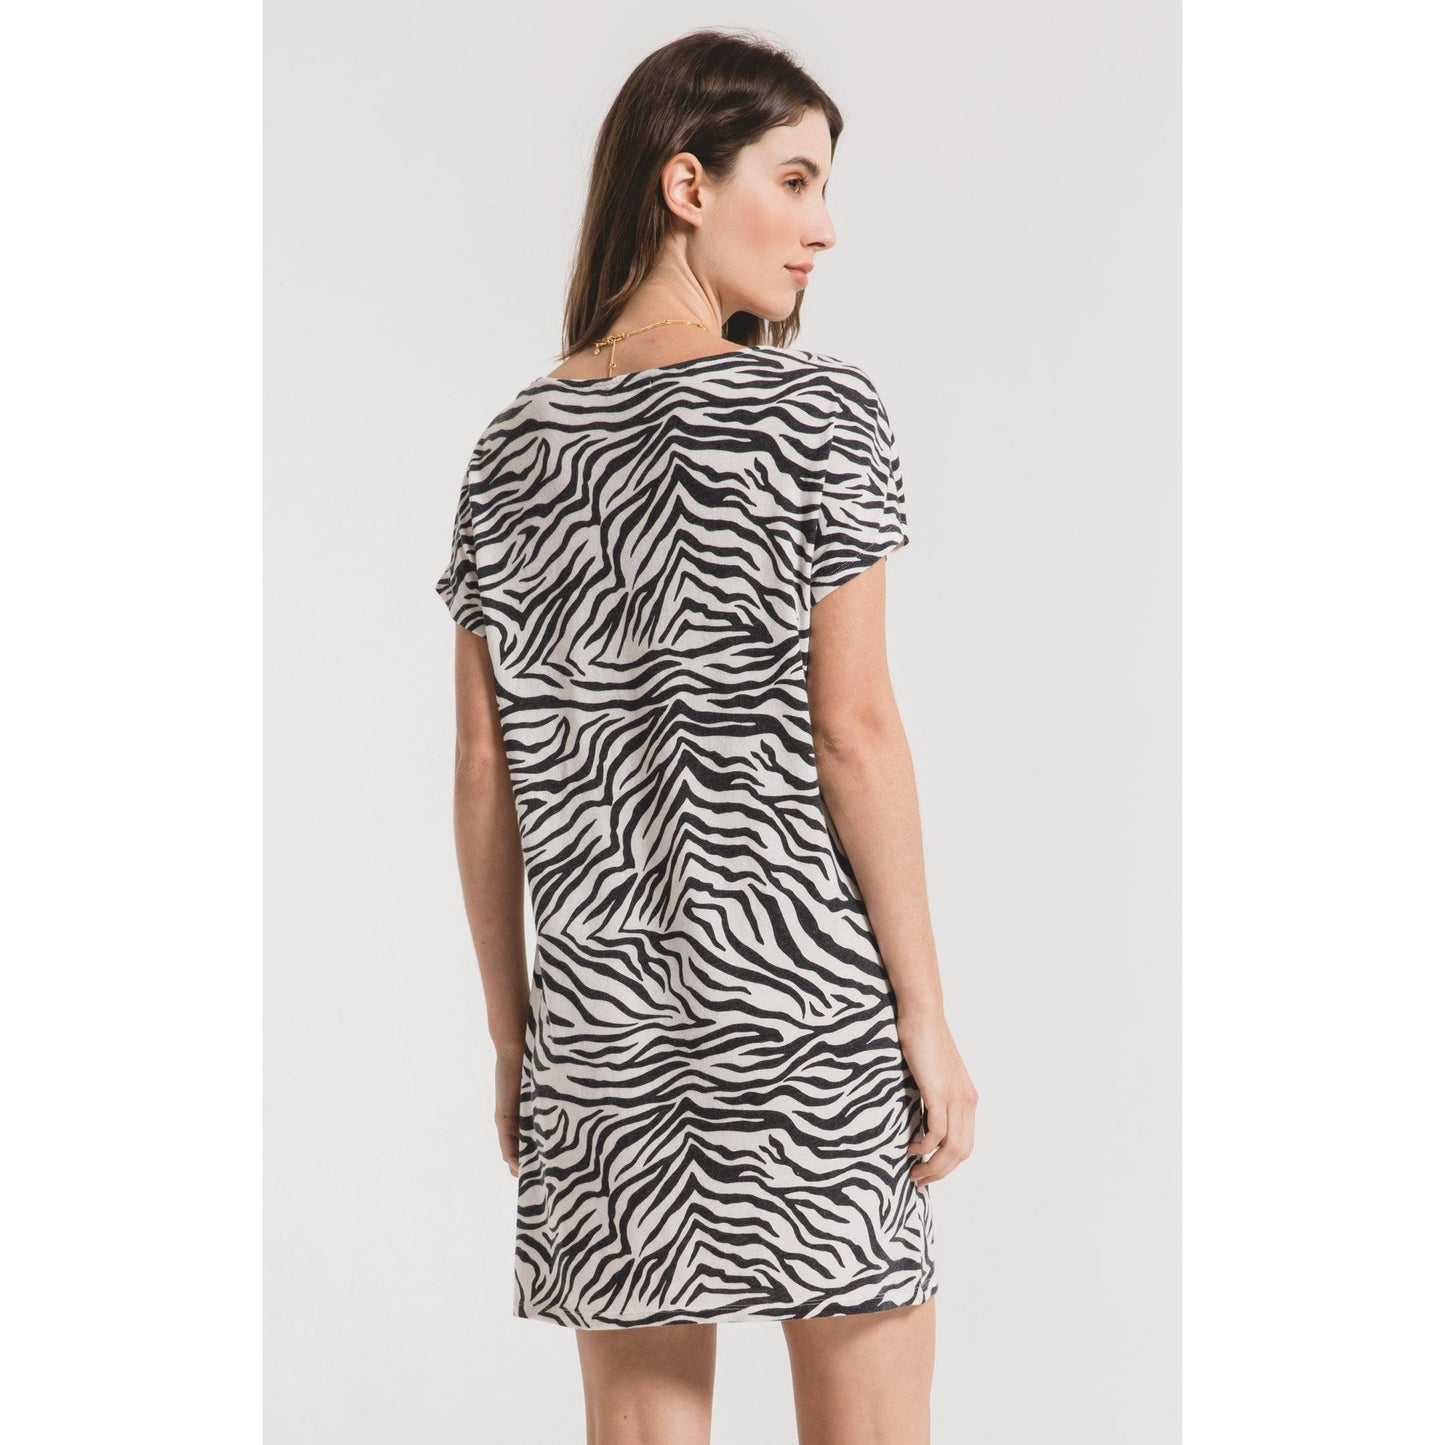 The Zebra Dress